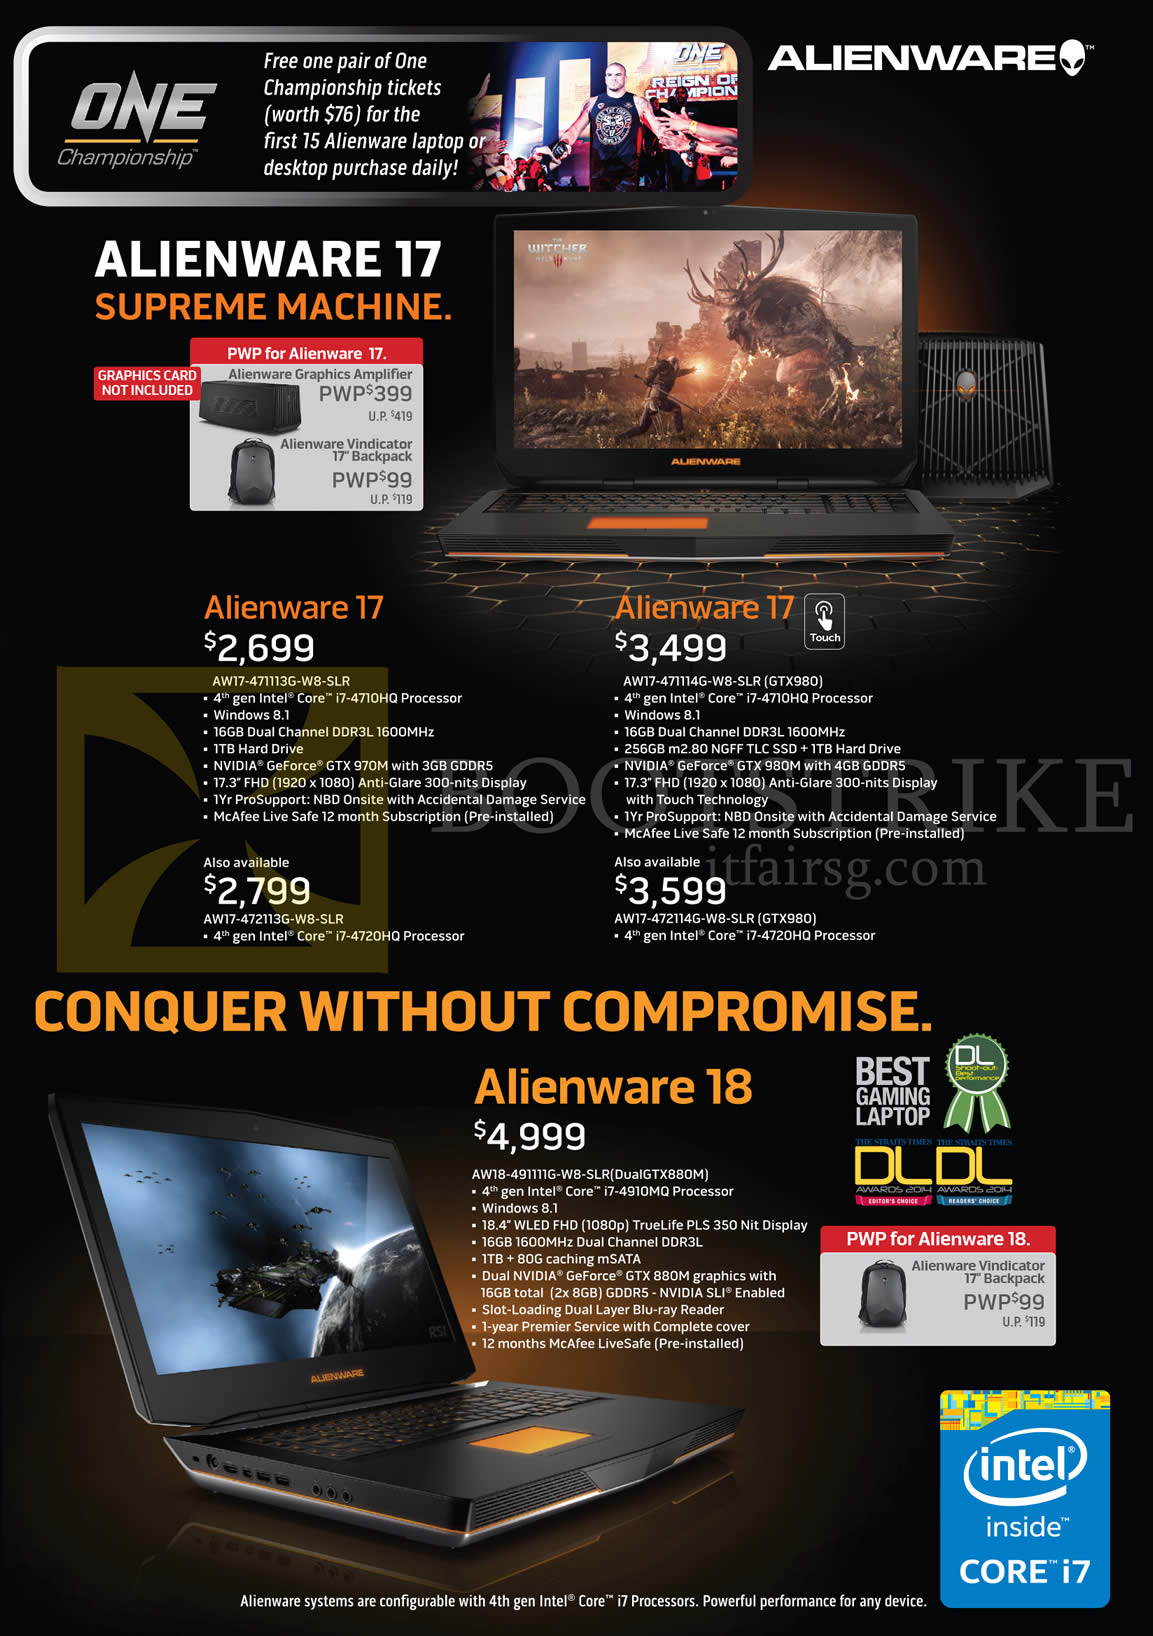 COMEX 2015 price list image brochure of Dell Notebooks Alienware AW17-471113G-W8-SLR, AW17-471114G-W8-SLR GTX980, AW18-491111G-W8-SLR DualGTX880M